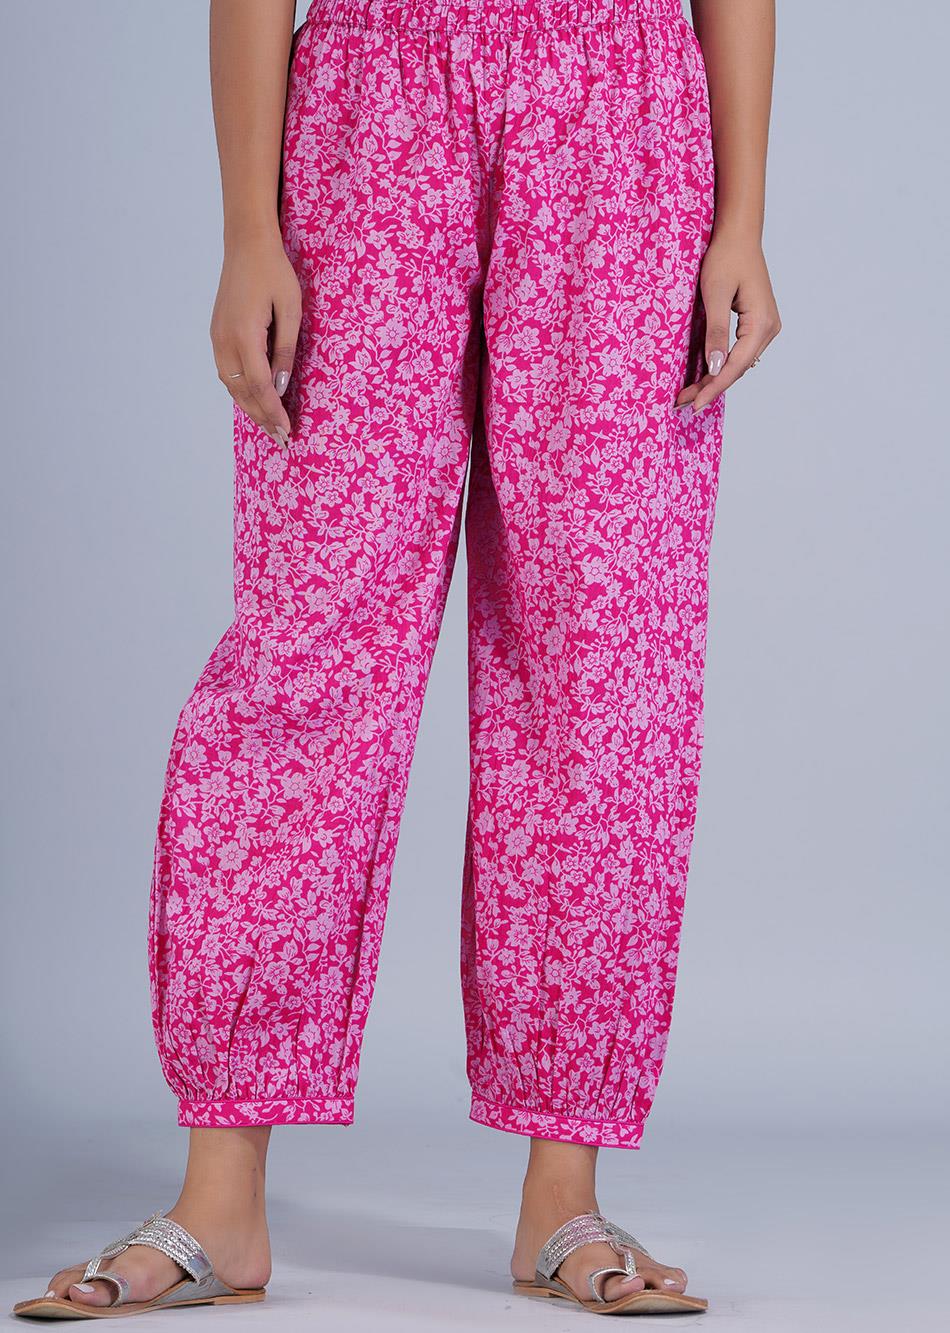 Printed Pink Afghani Pants By Jovi Fashion